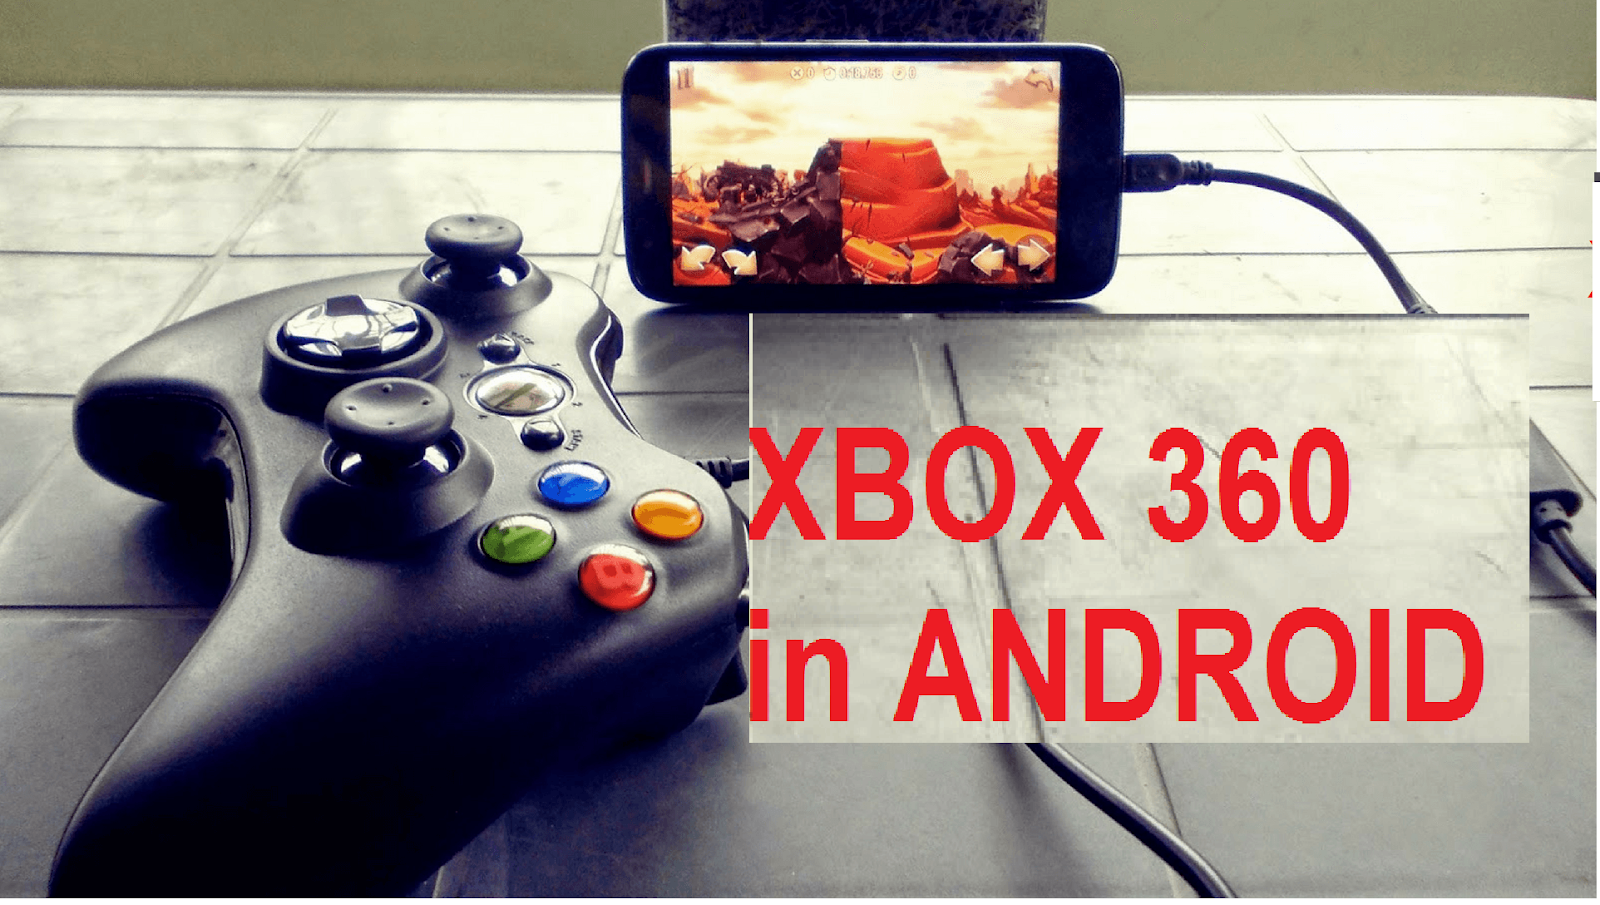 Emulator xbox 360 на андроид. Xbox 360 эмулятор андроид. Эмулятор хбокс 360 на андроид. Xbox 360 Emulator Android.